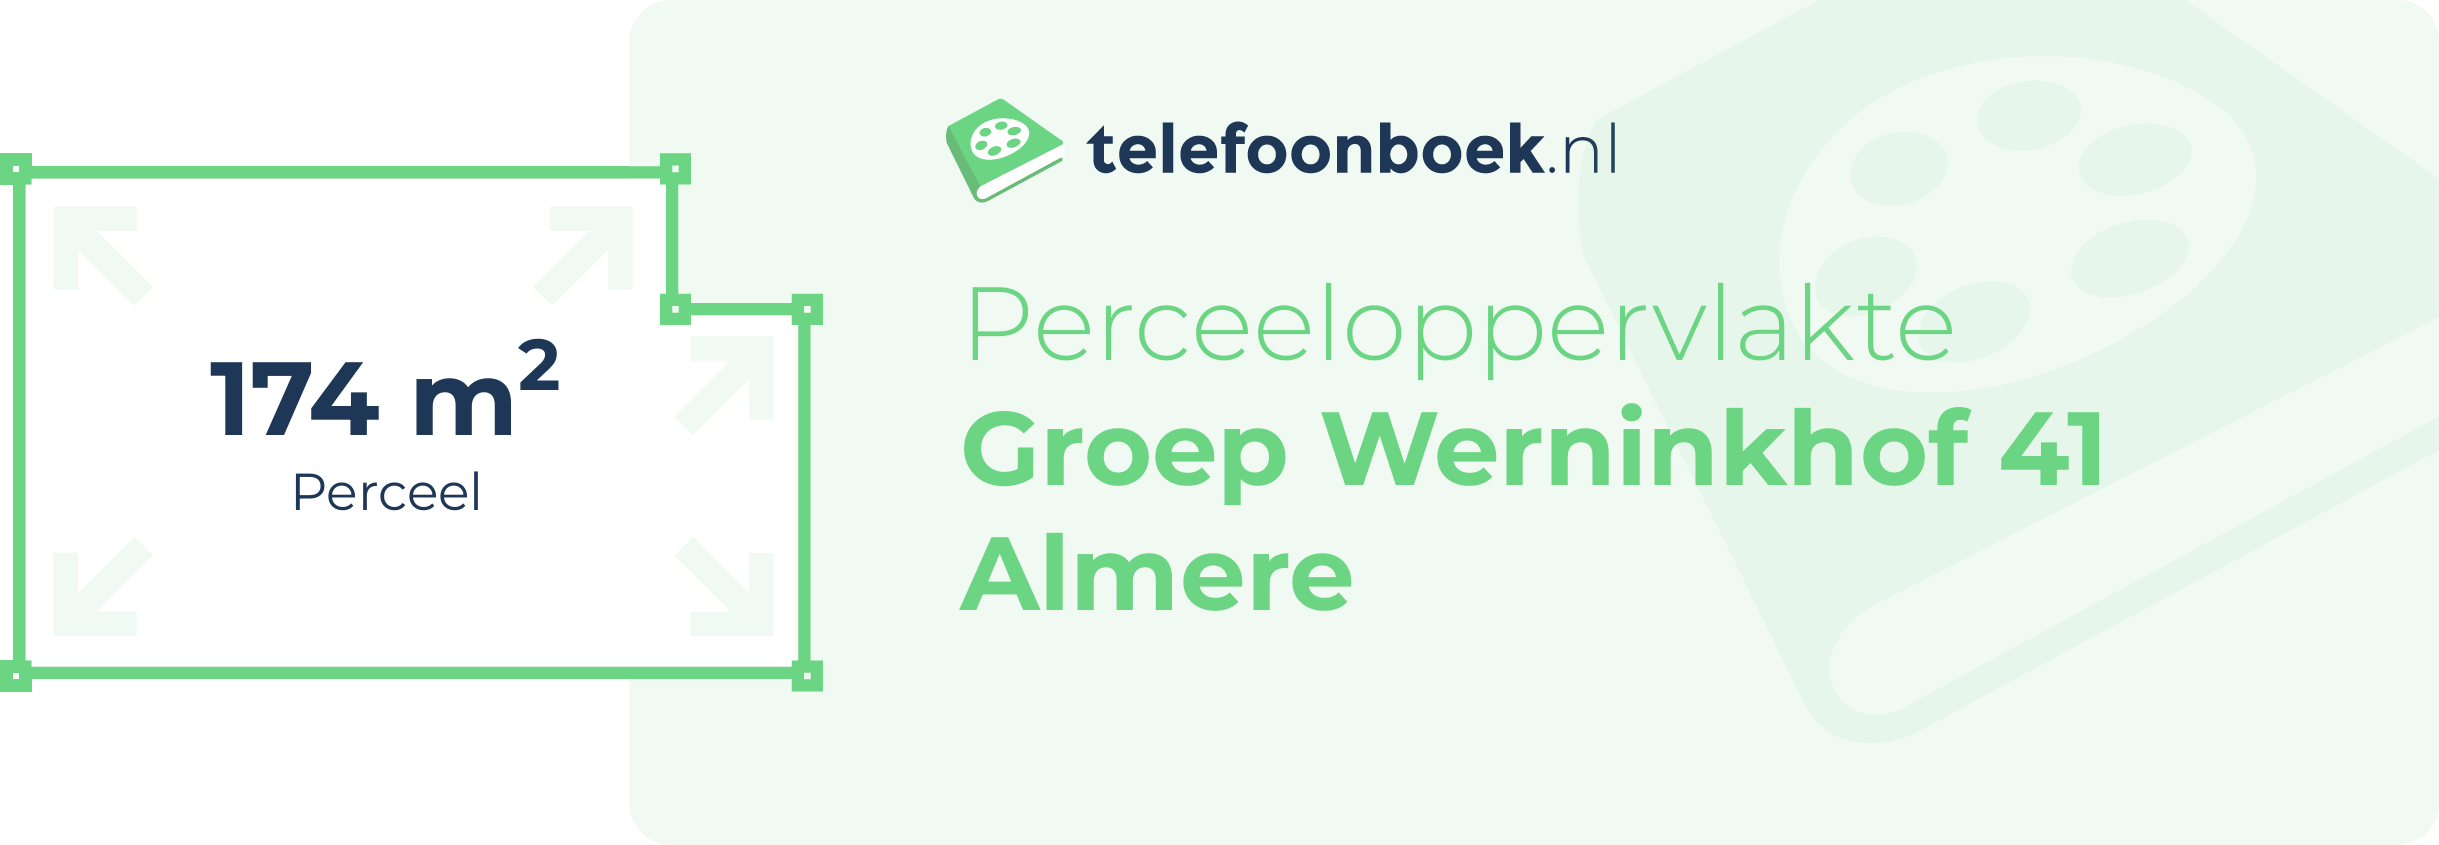 Perceeloppervlakte Groep Werninkhof 41 Almere